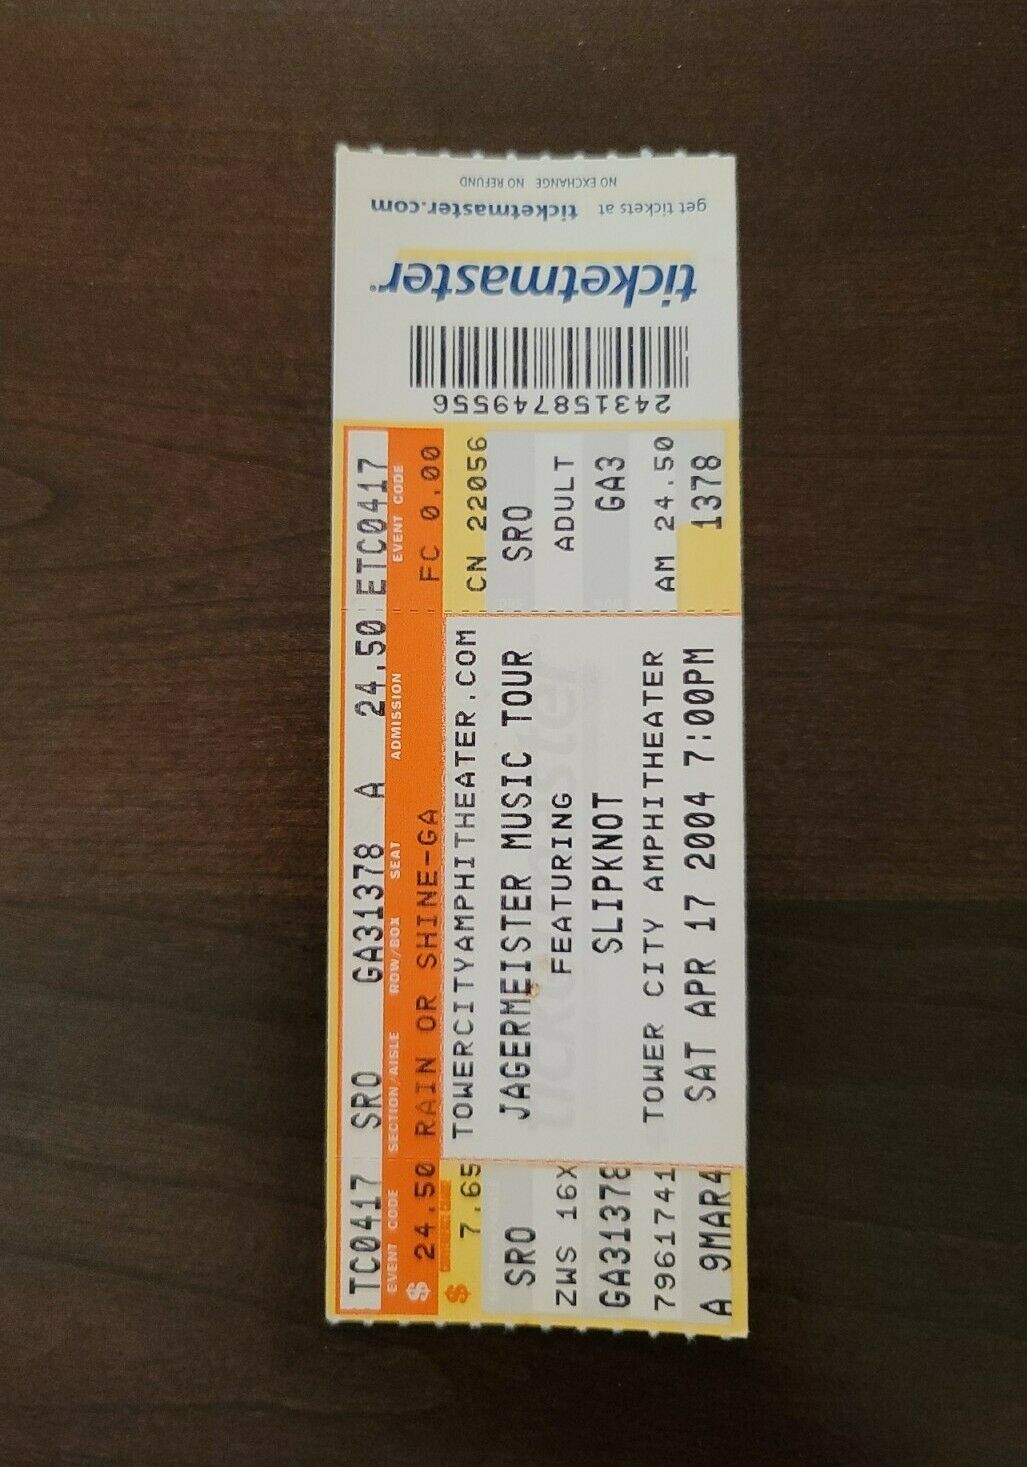 Slipknot 2004, Cleveland Tower City Amphitheater Concert Ticket Stub